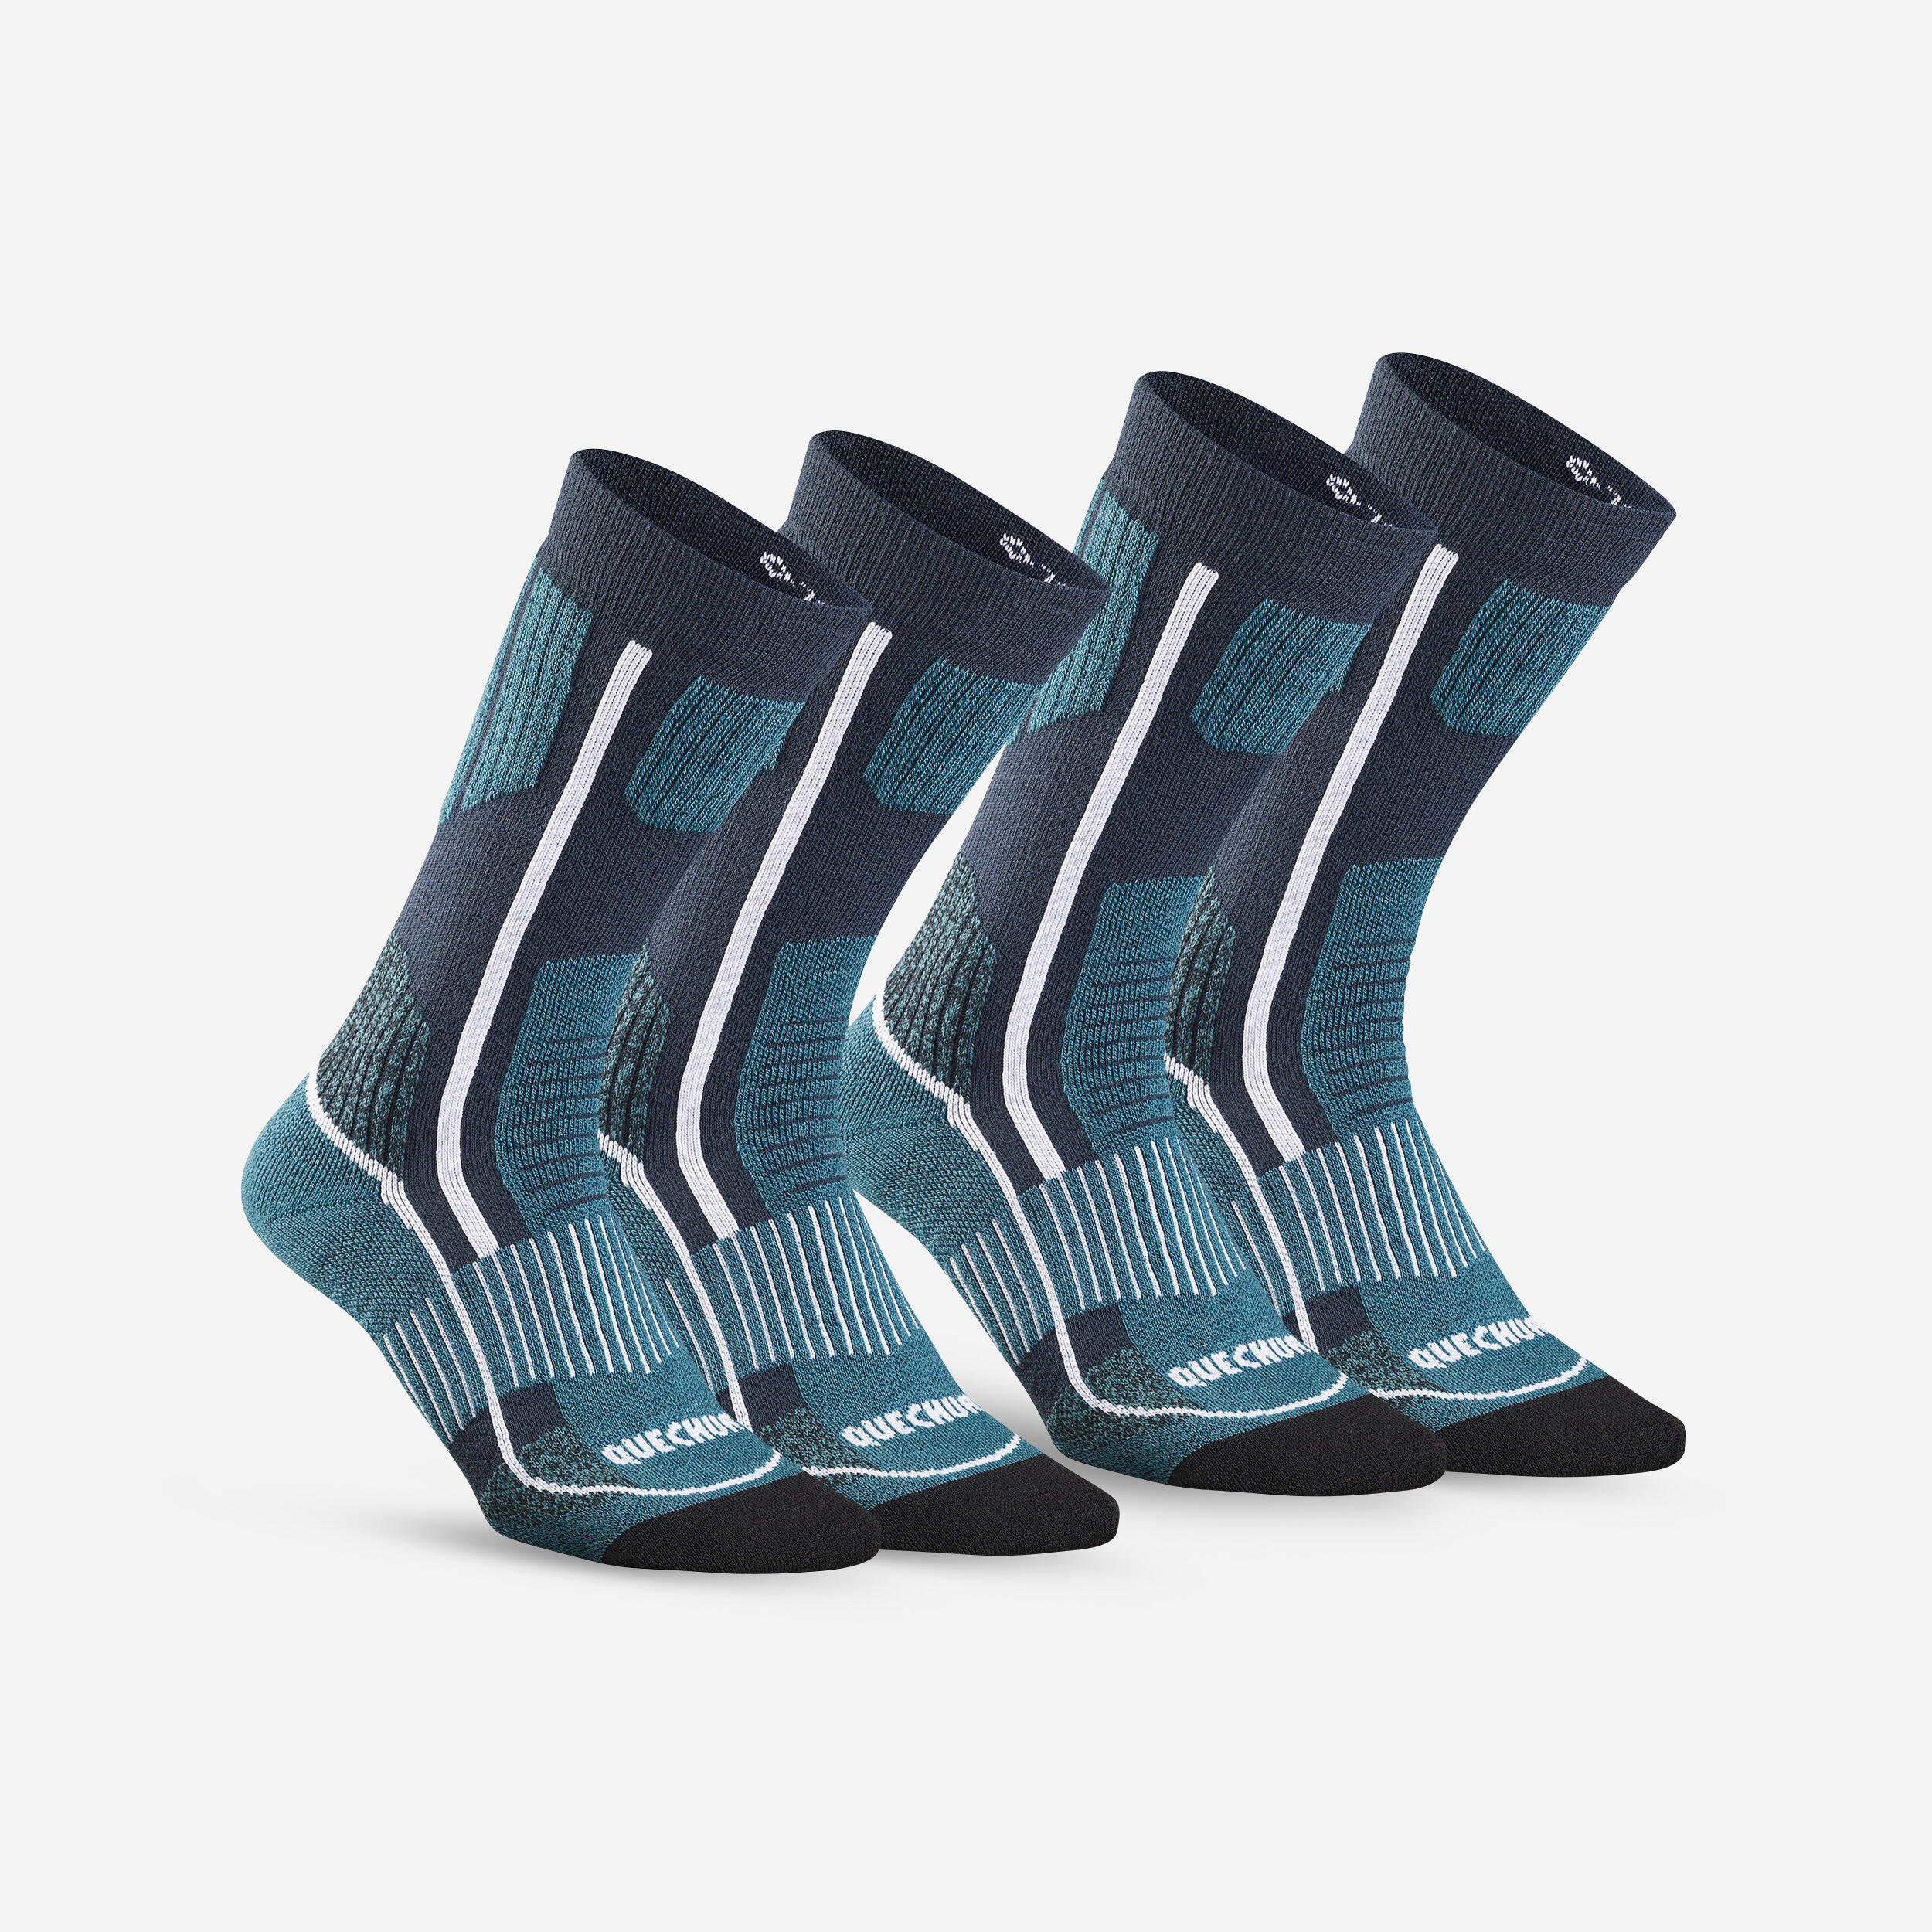 Warm Hiking Socks - SH500 MOUNTAIN MID - 2 Pairs 1/4